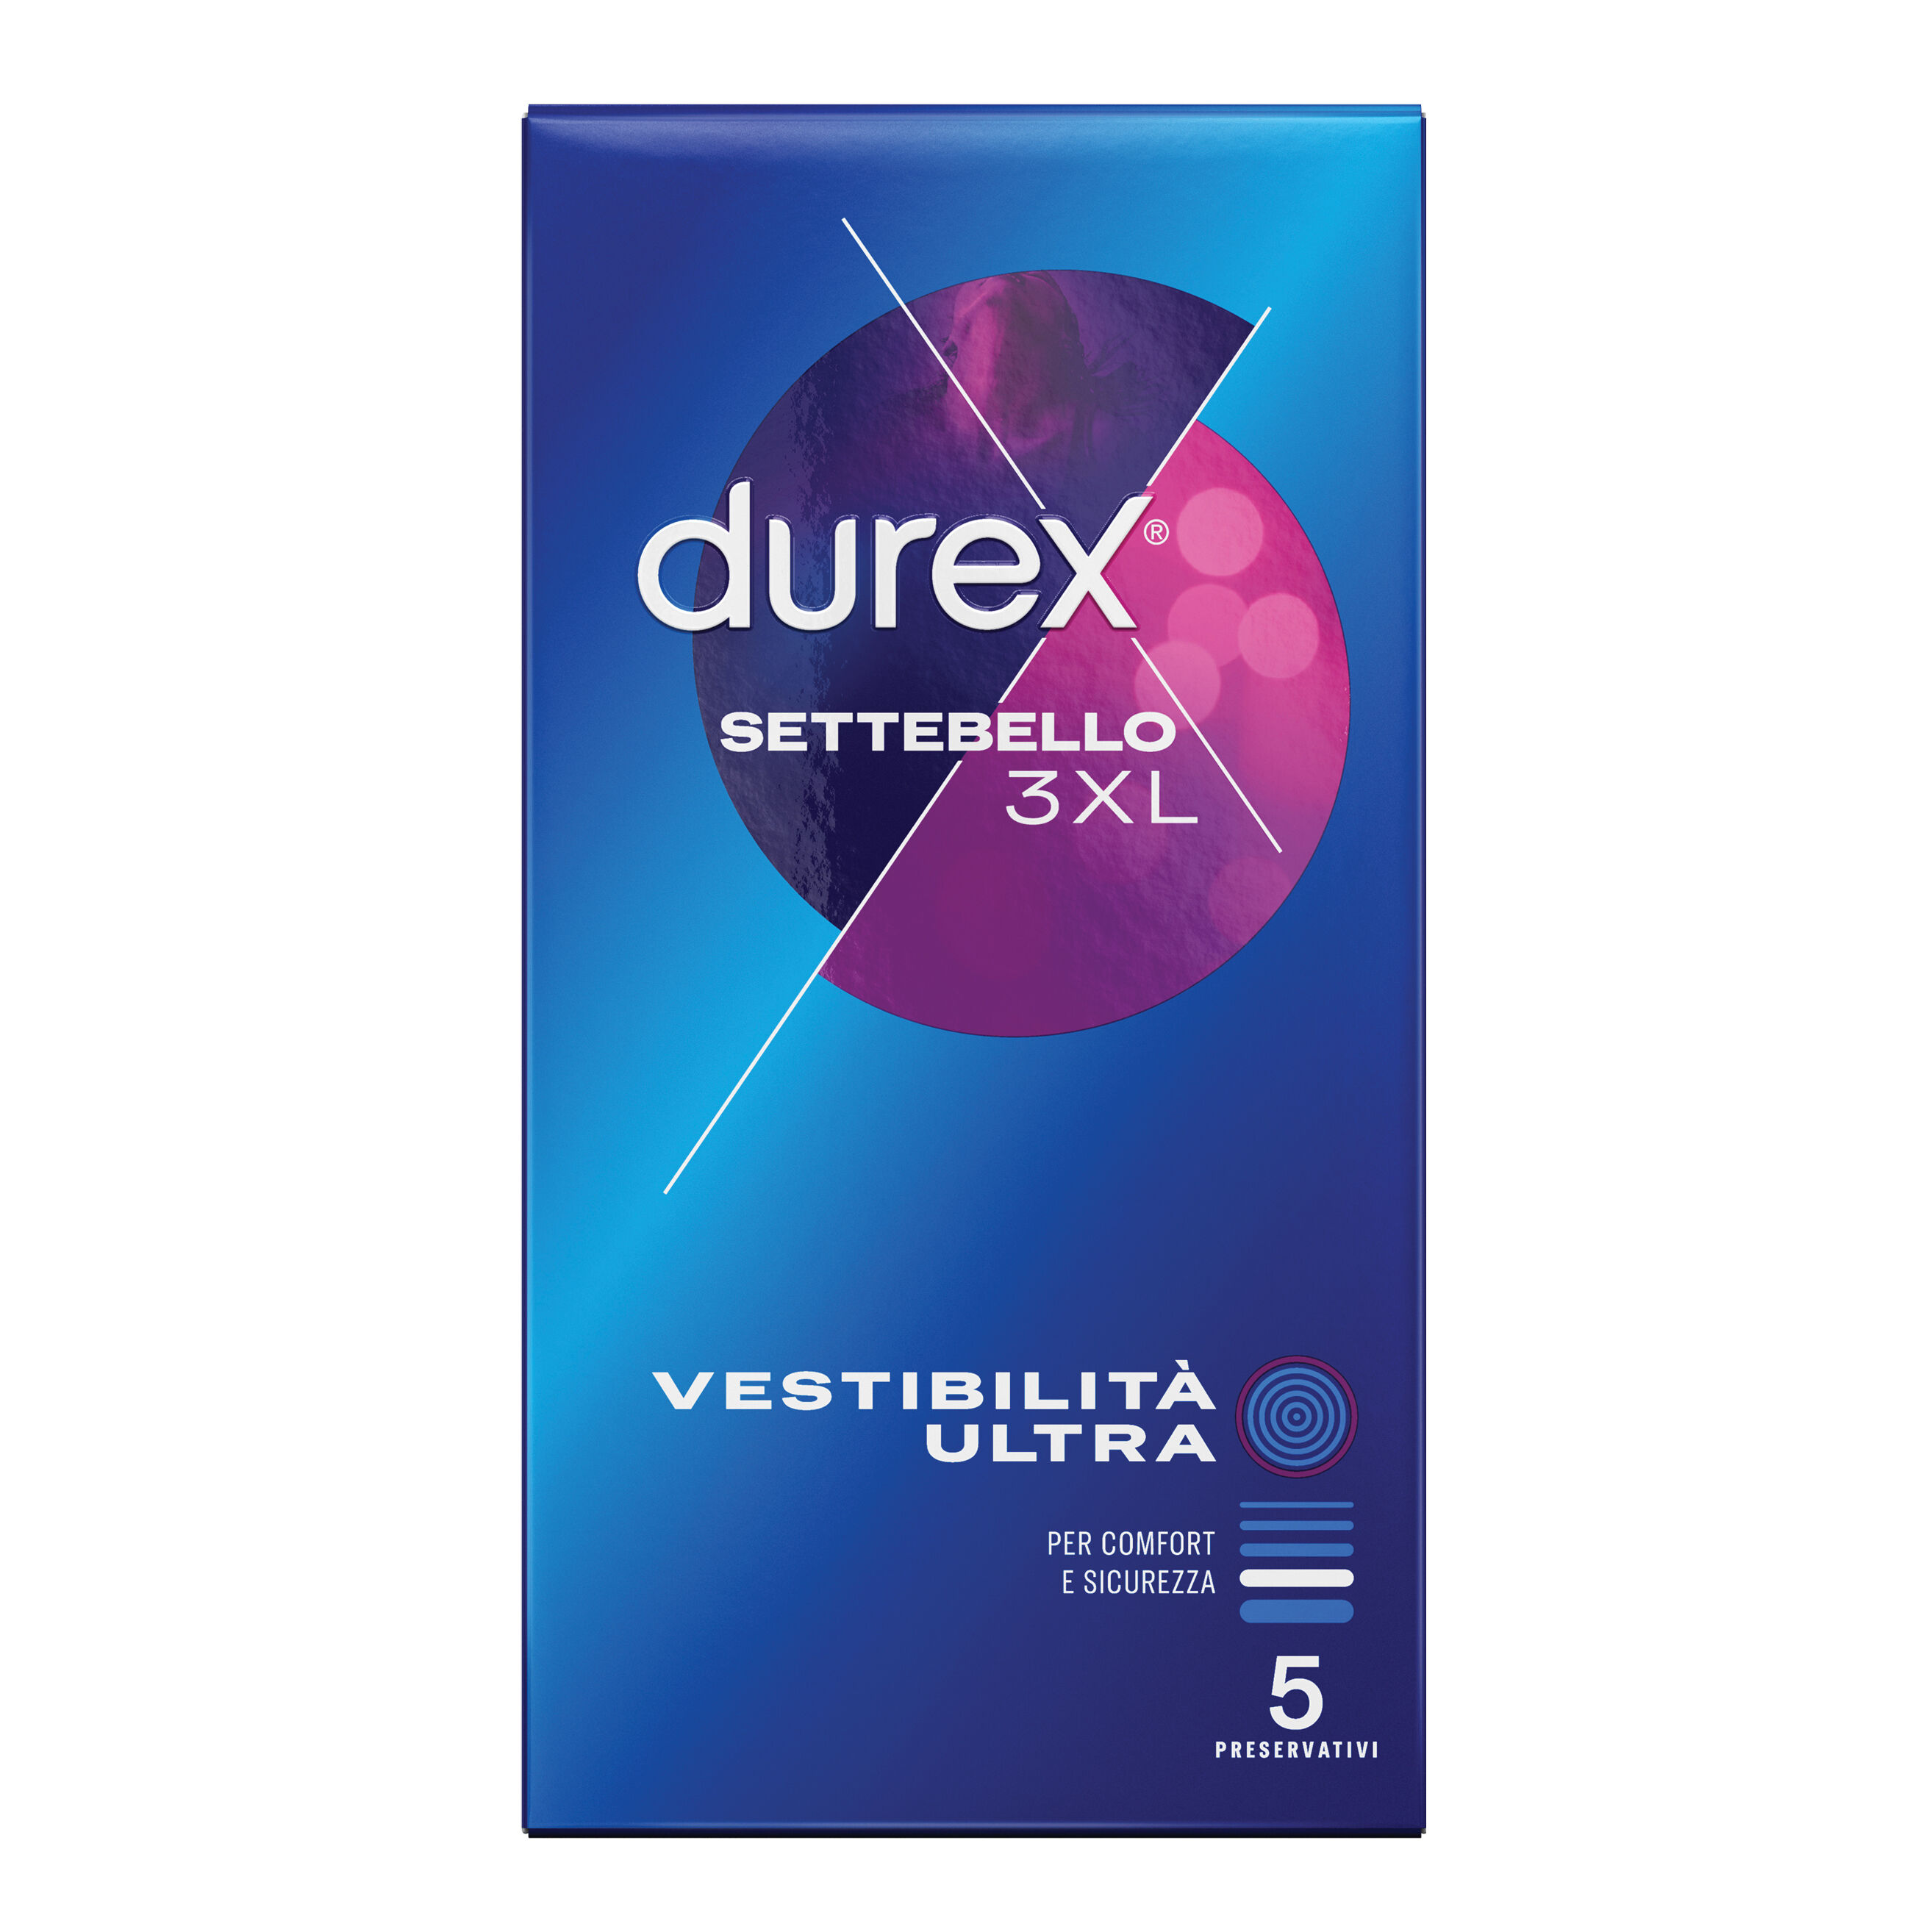 Durex Preservativo 3xl vestibilita' ultra 5 pezzi